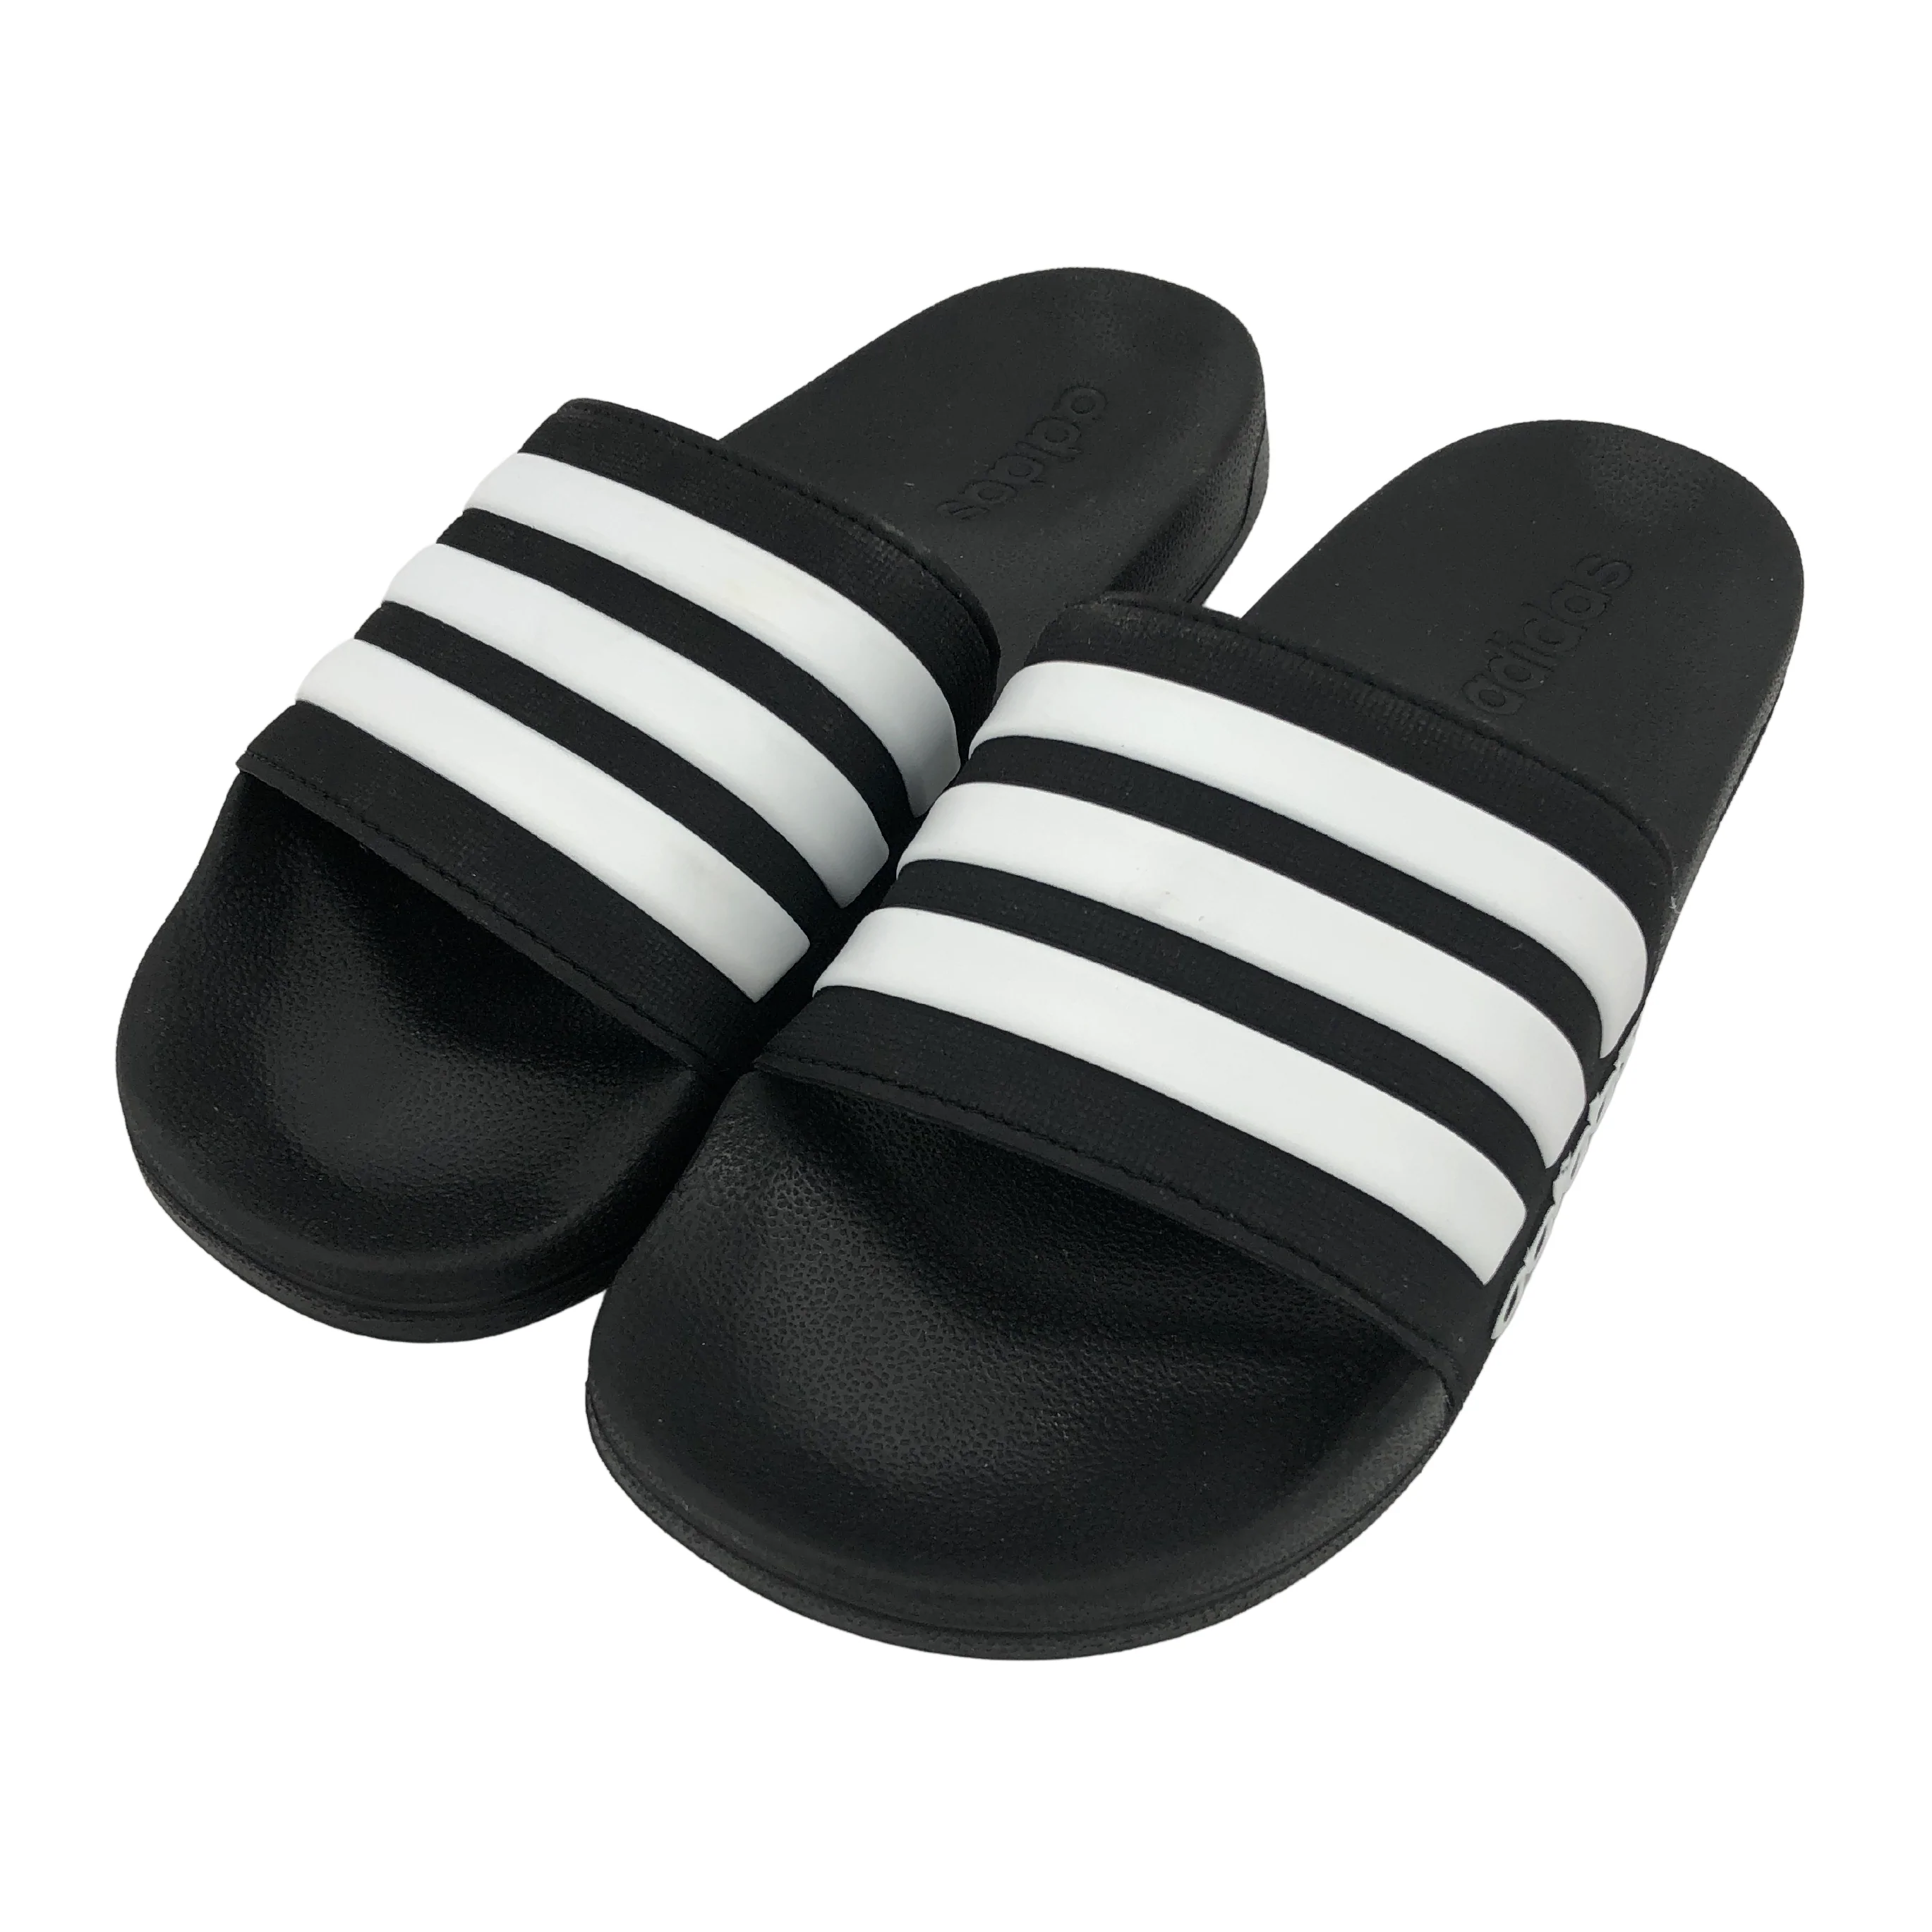 Adidas Adilette Aqua Sandals: Black with Classic White Stripes / Slip On / Various Sizes